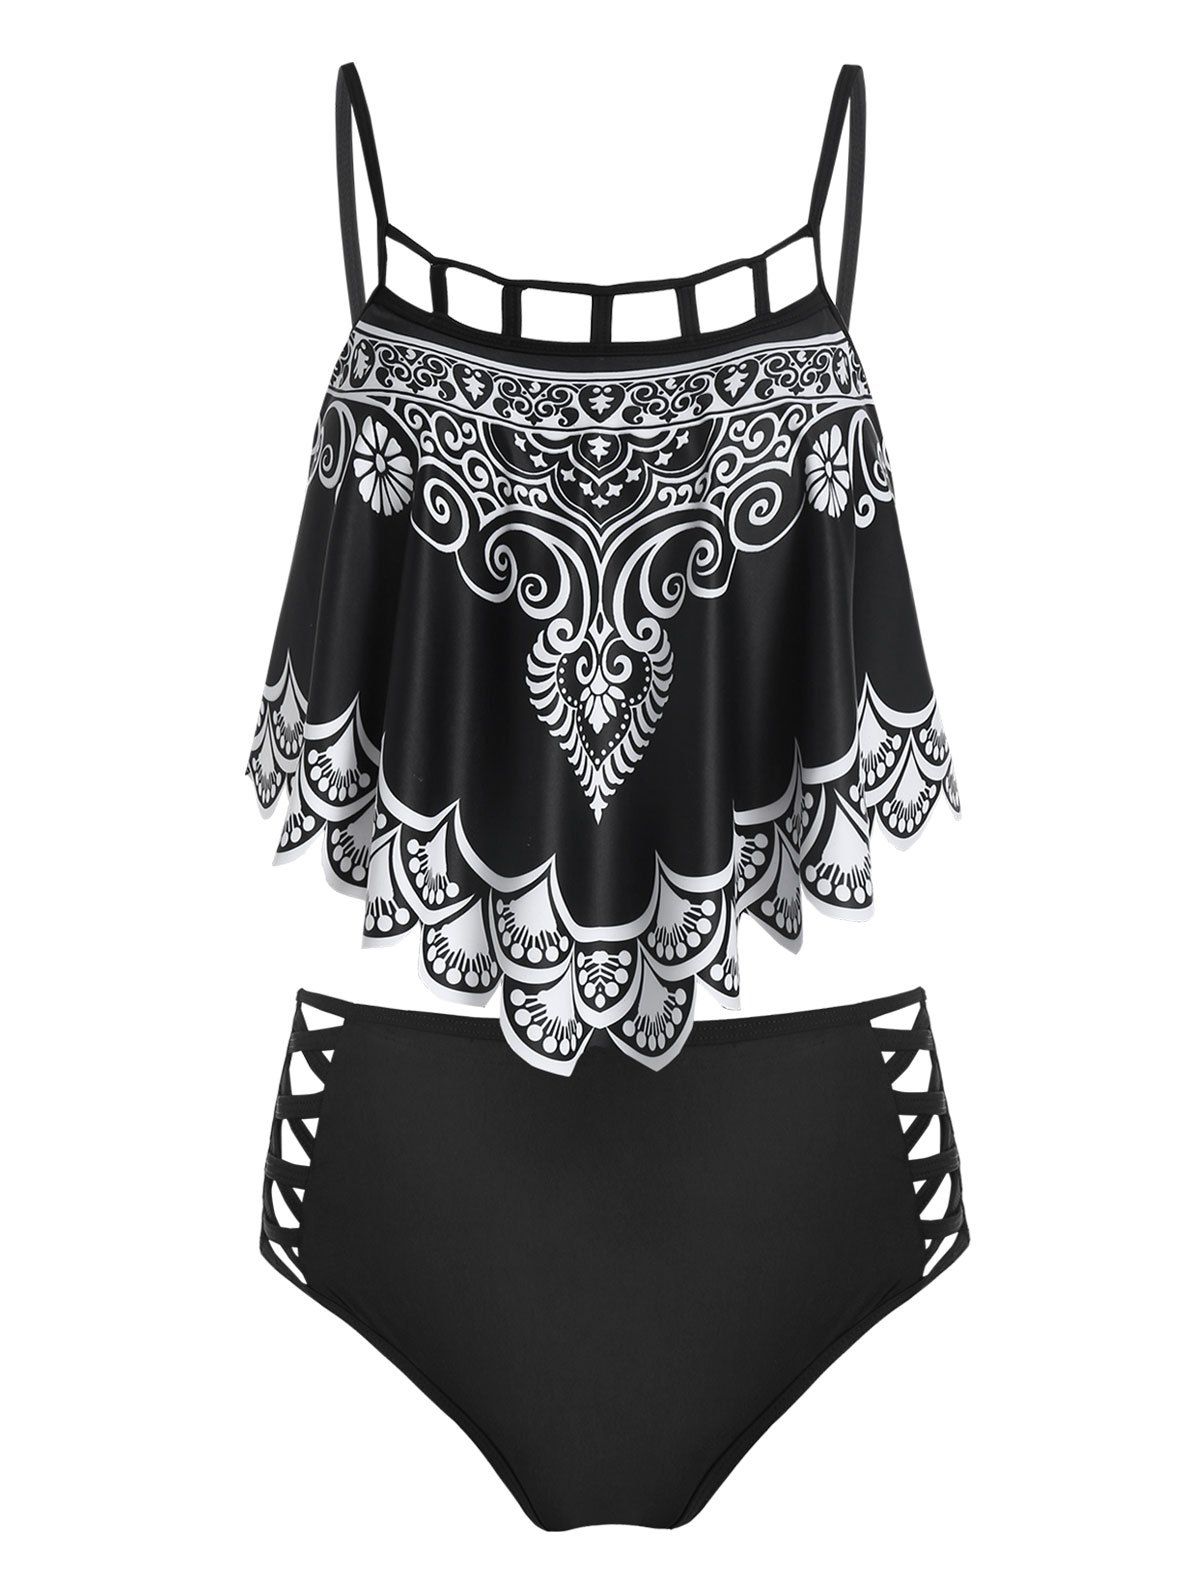 Ethnic Style Swimsuit Bohemian Bathing Suit Tribal Print Crisscross Tummy Control Tankini Swimwear - BLACK 2XL